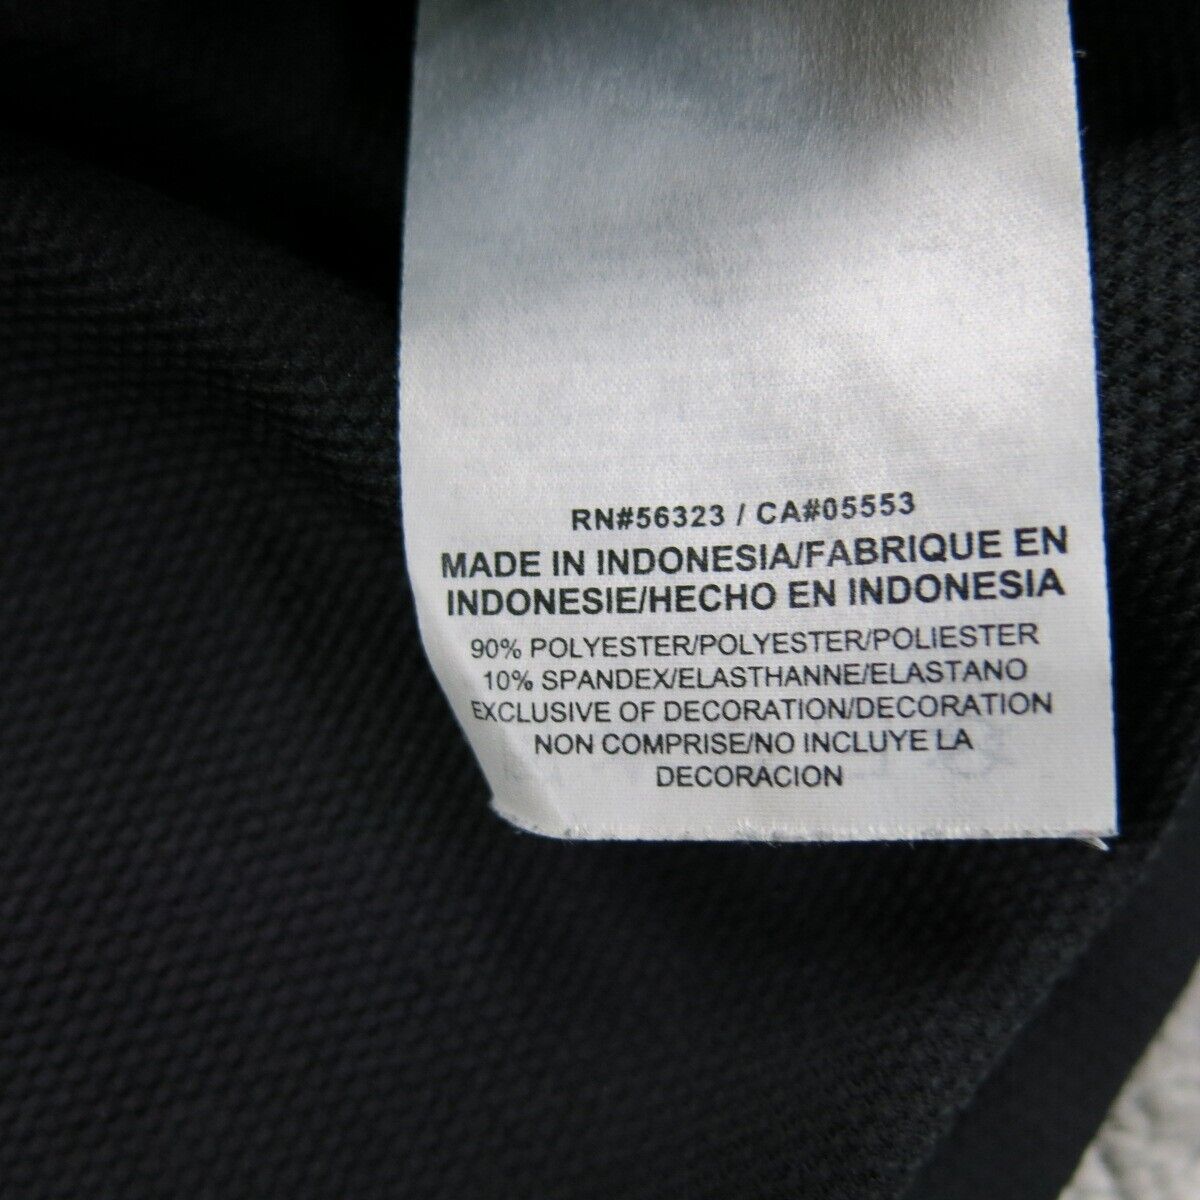 Nike Dri Fit Women Golf Polo Shirt Top Athletic Trading Short Sleeve Black Small